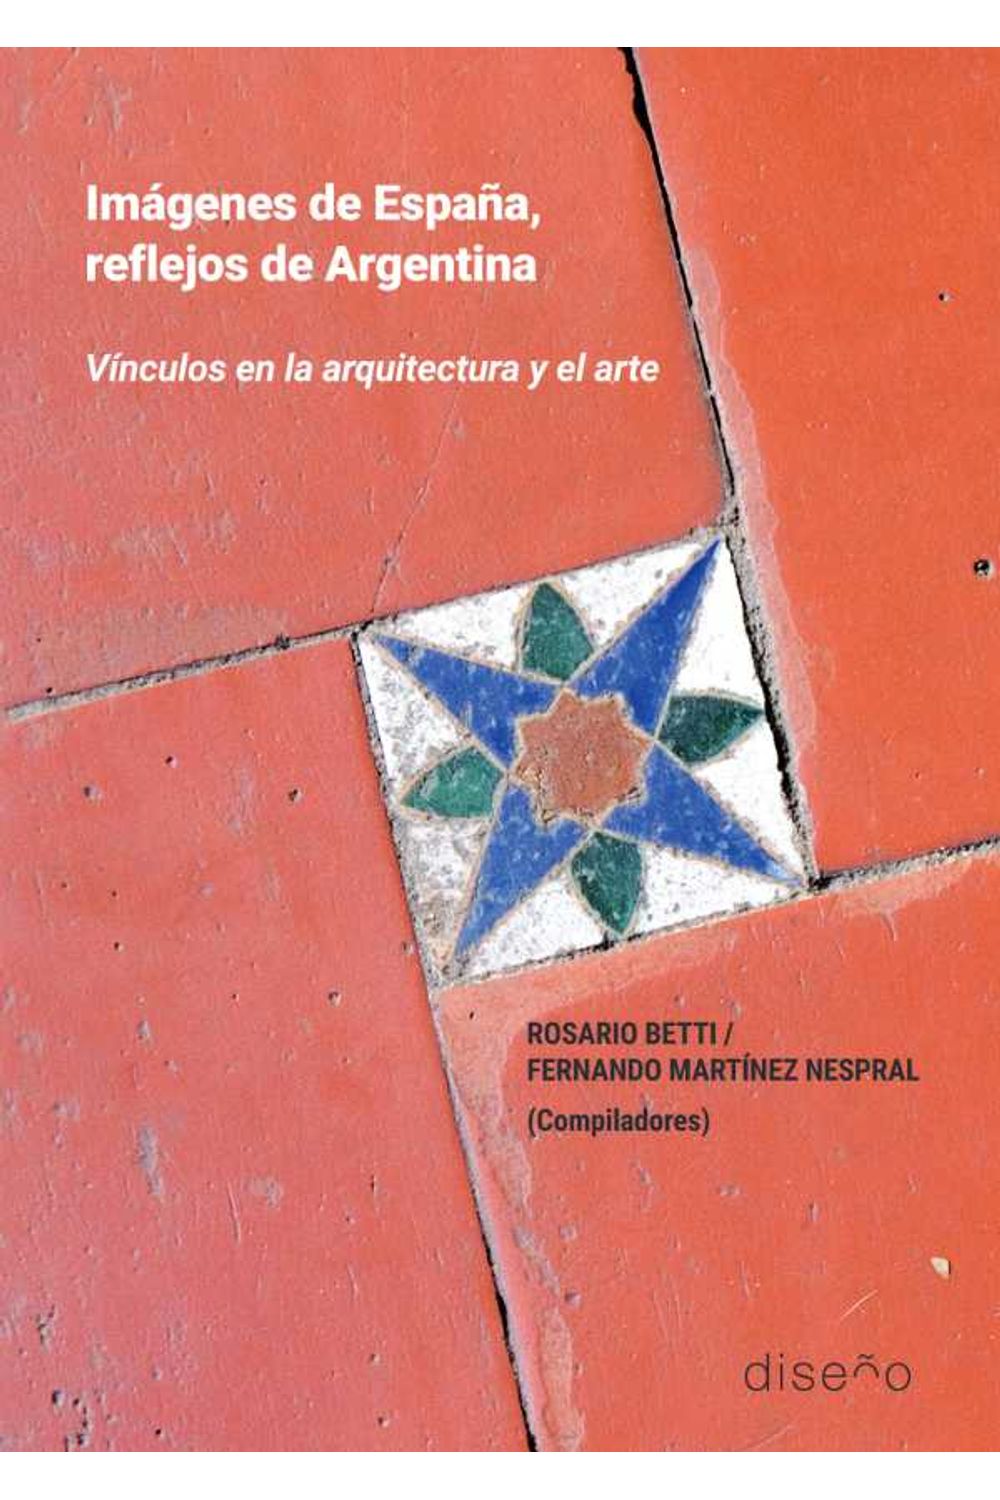 bw-imaacutegenes-de-espantildea-reflejos-de-argentina-nobukodiseo-editorial-9789874000972